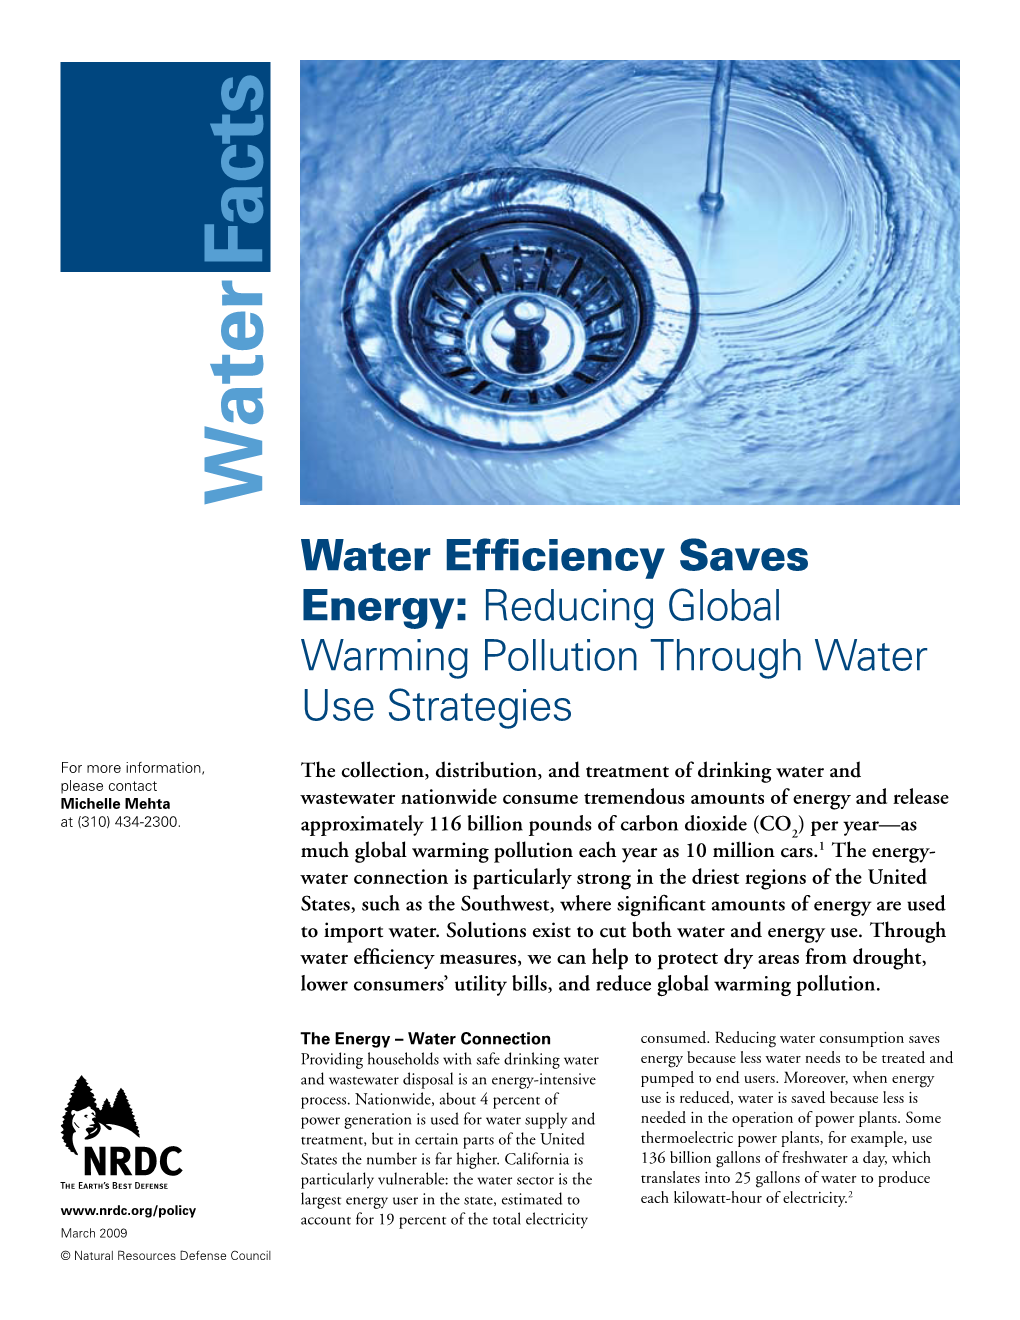 Water Efficiency Saves Energy – Reducing Global Warming Pollution